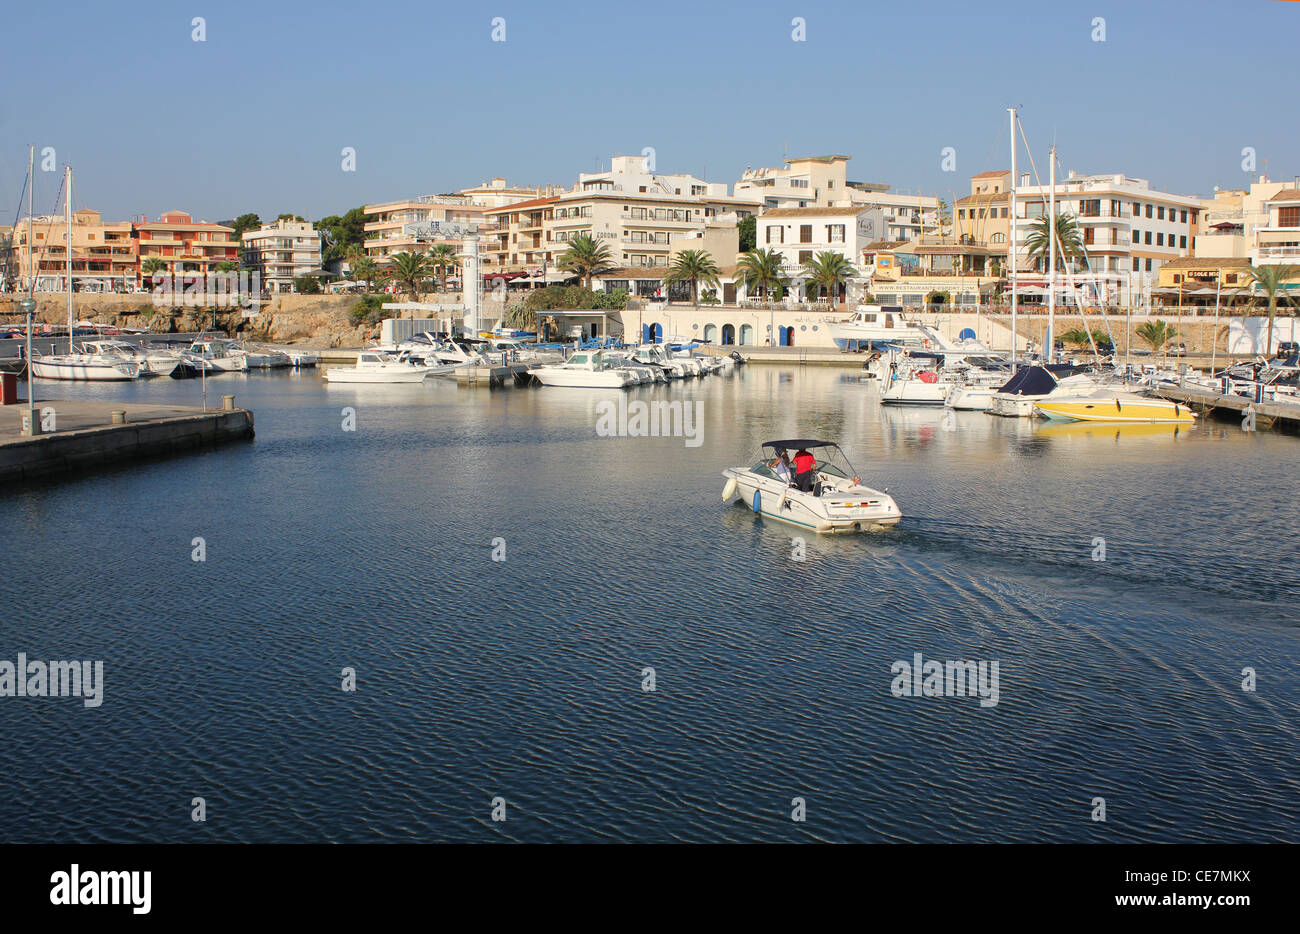 Cala Ratjada / Cala Rajada - Segelboote + Motorboote in Marina / Hafen + Port side Restaurants und Hotels / Appartements Stockfoto